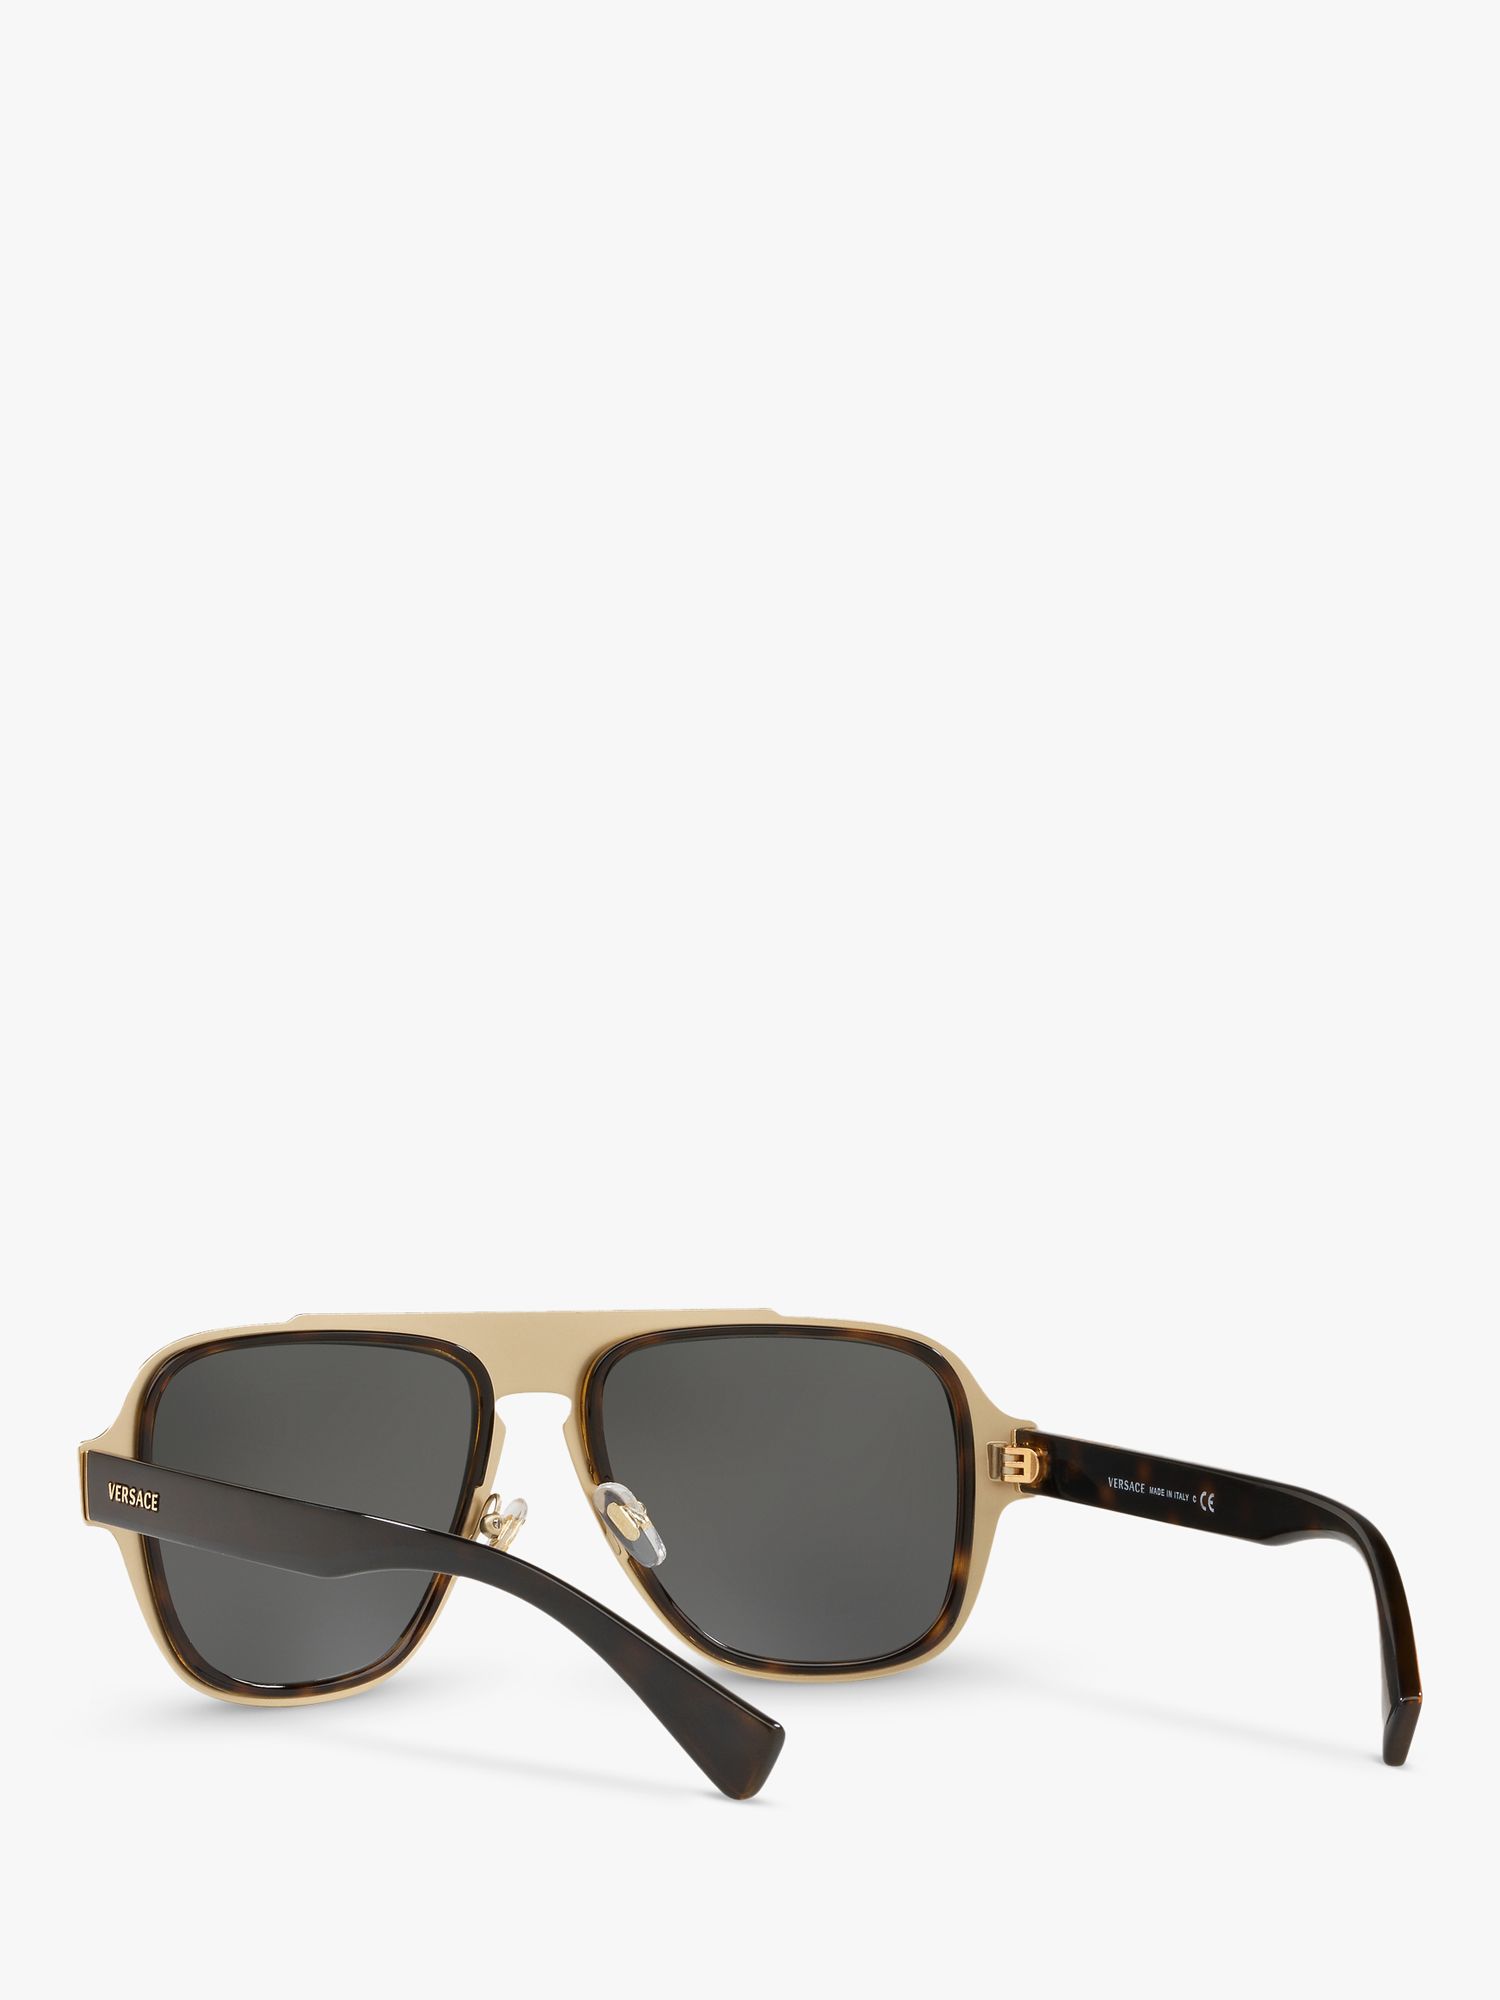 Versace VE2199 Men's Geometric Sunglasses, Havana/Grey